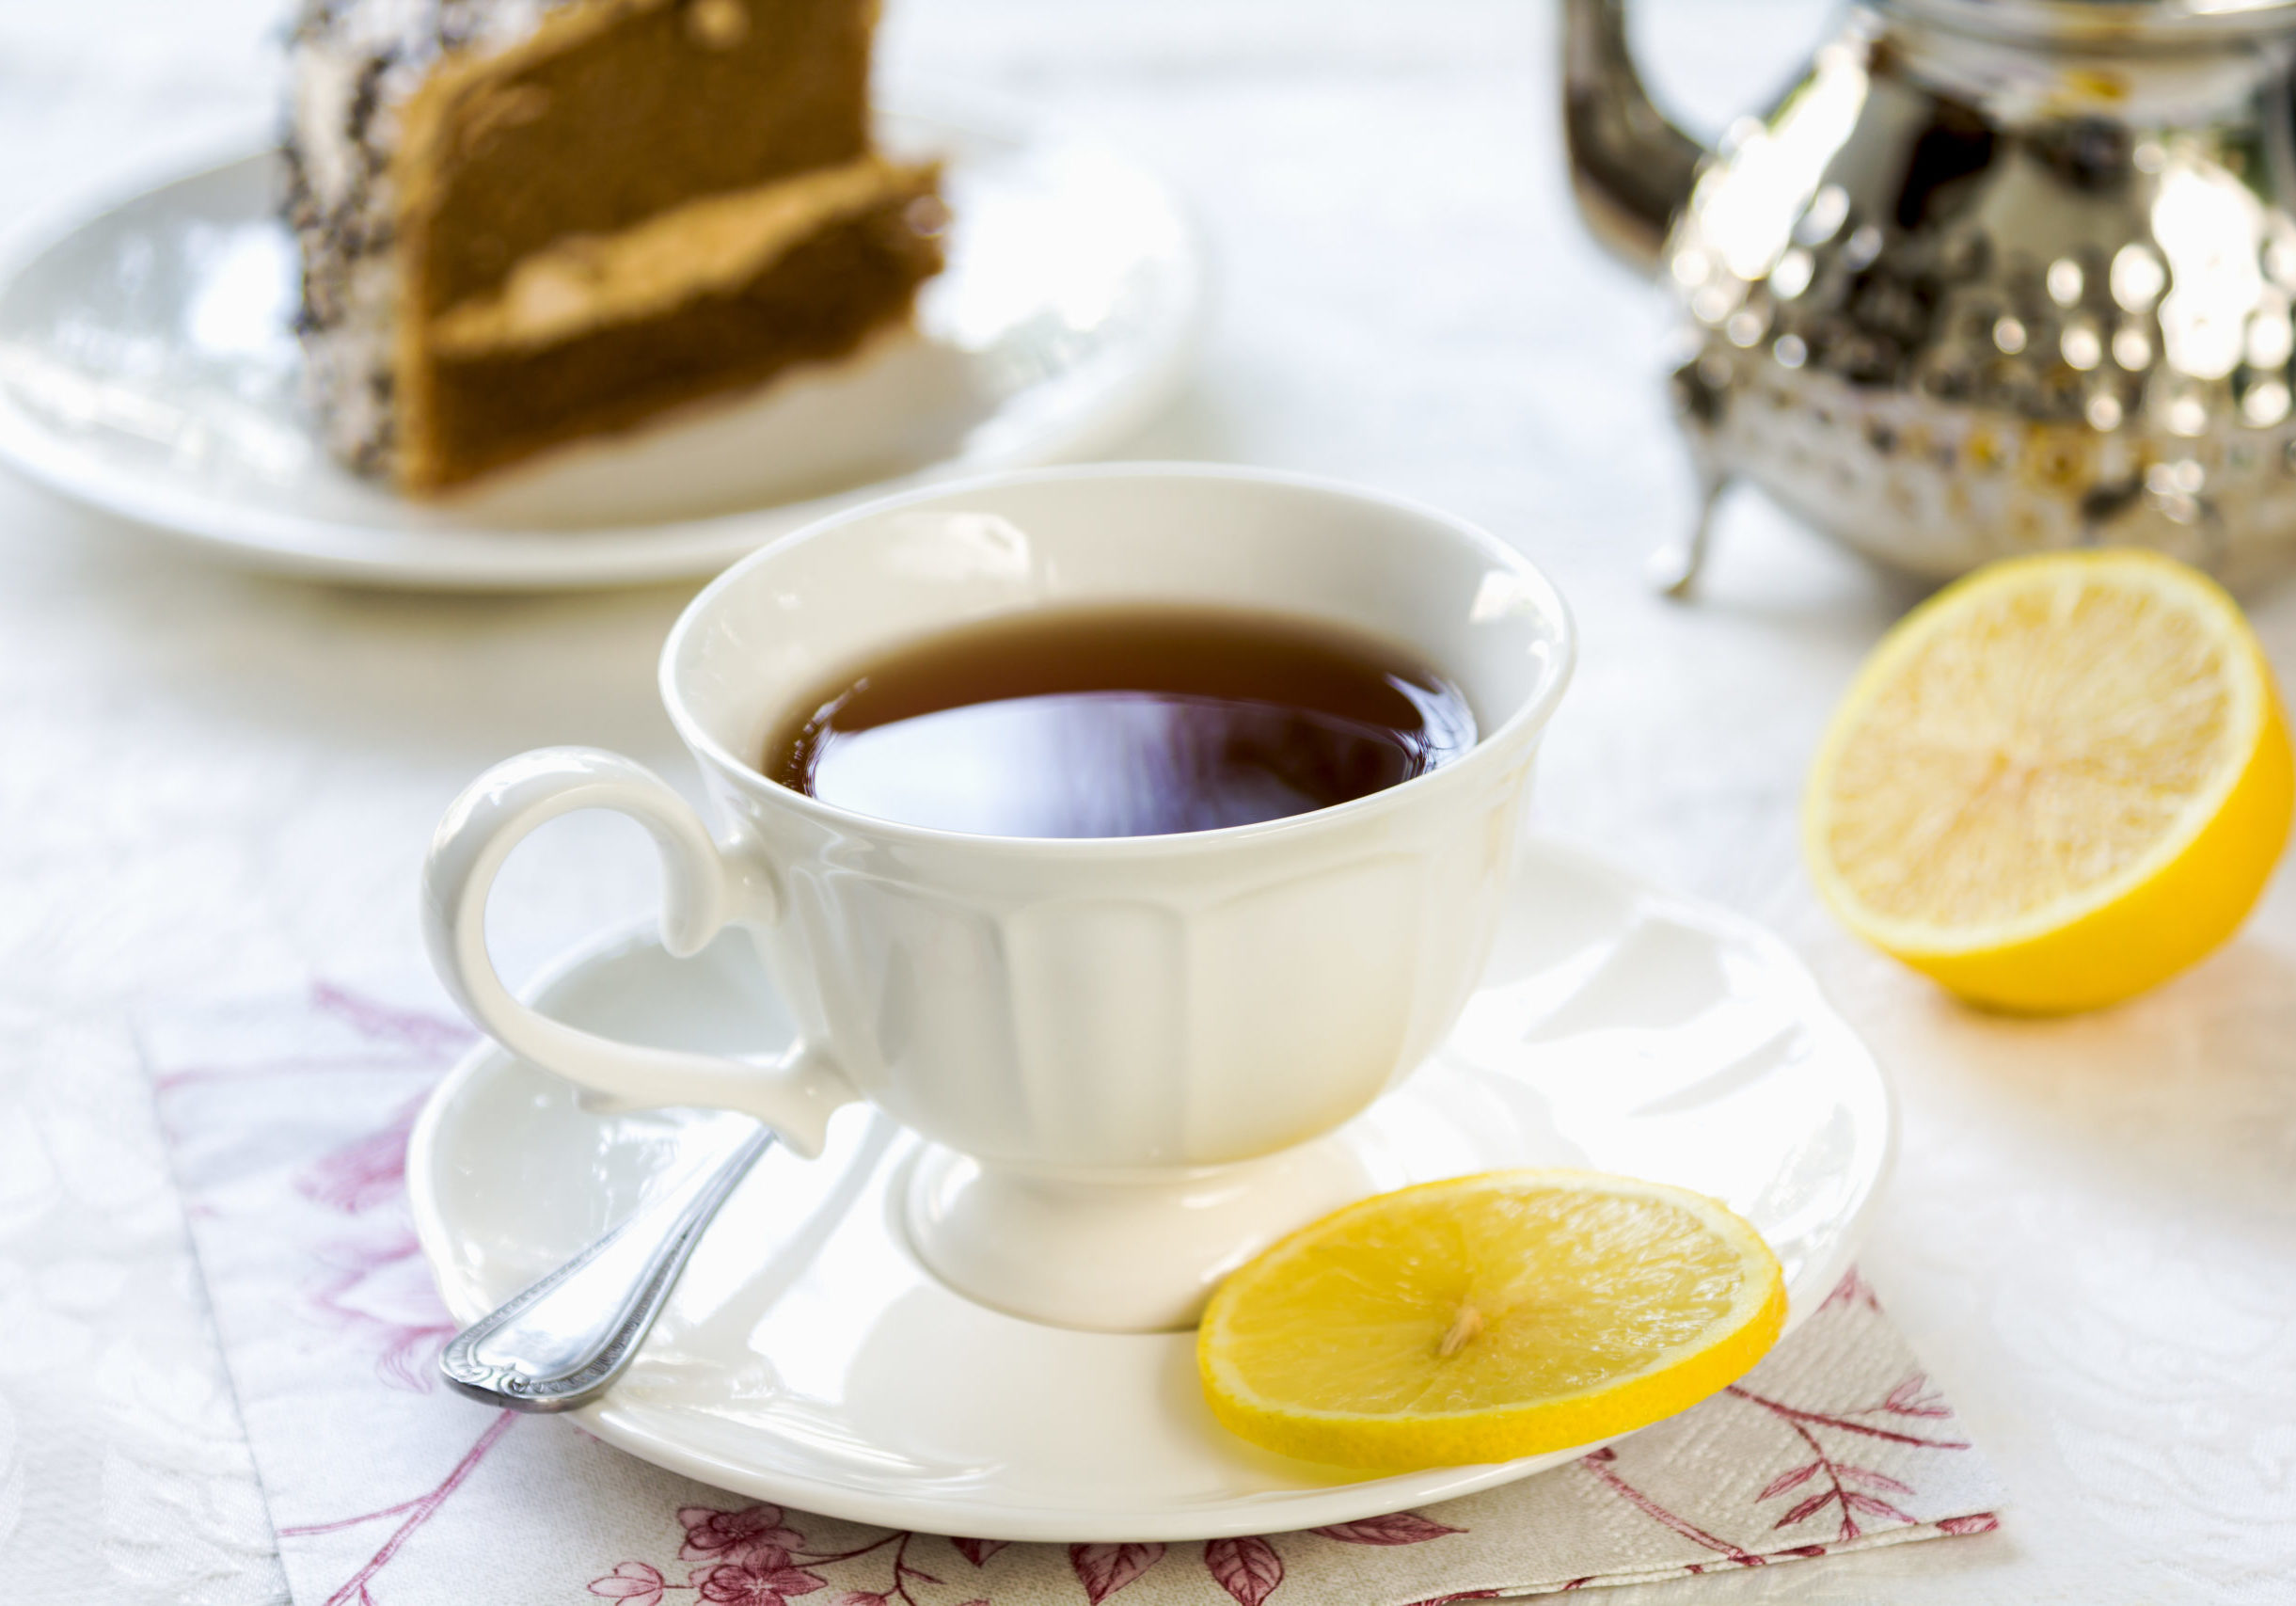 Balck tea with lemon by a tea pot